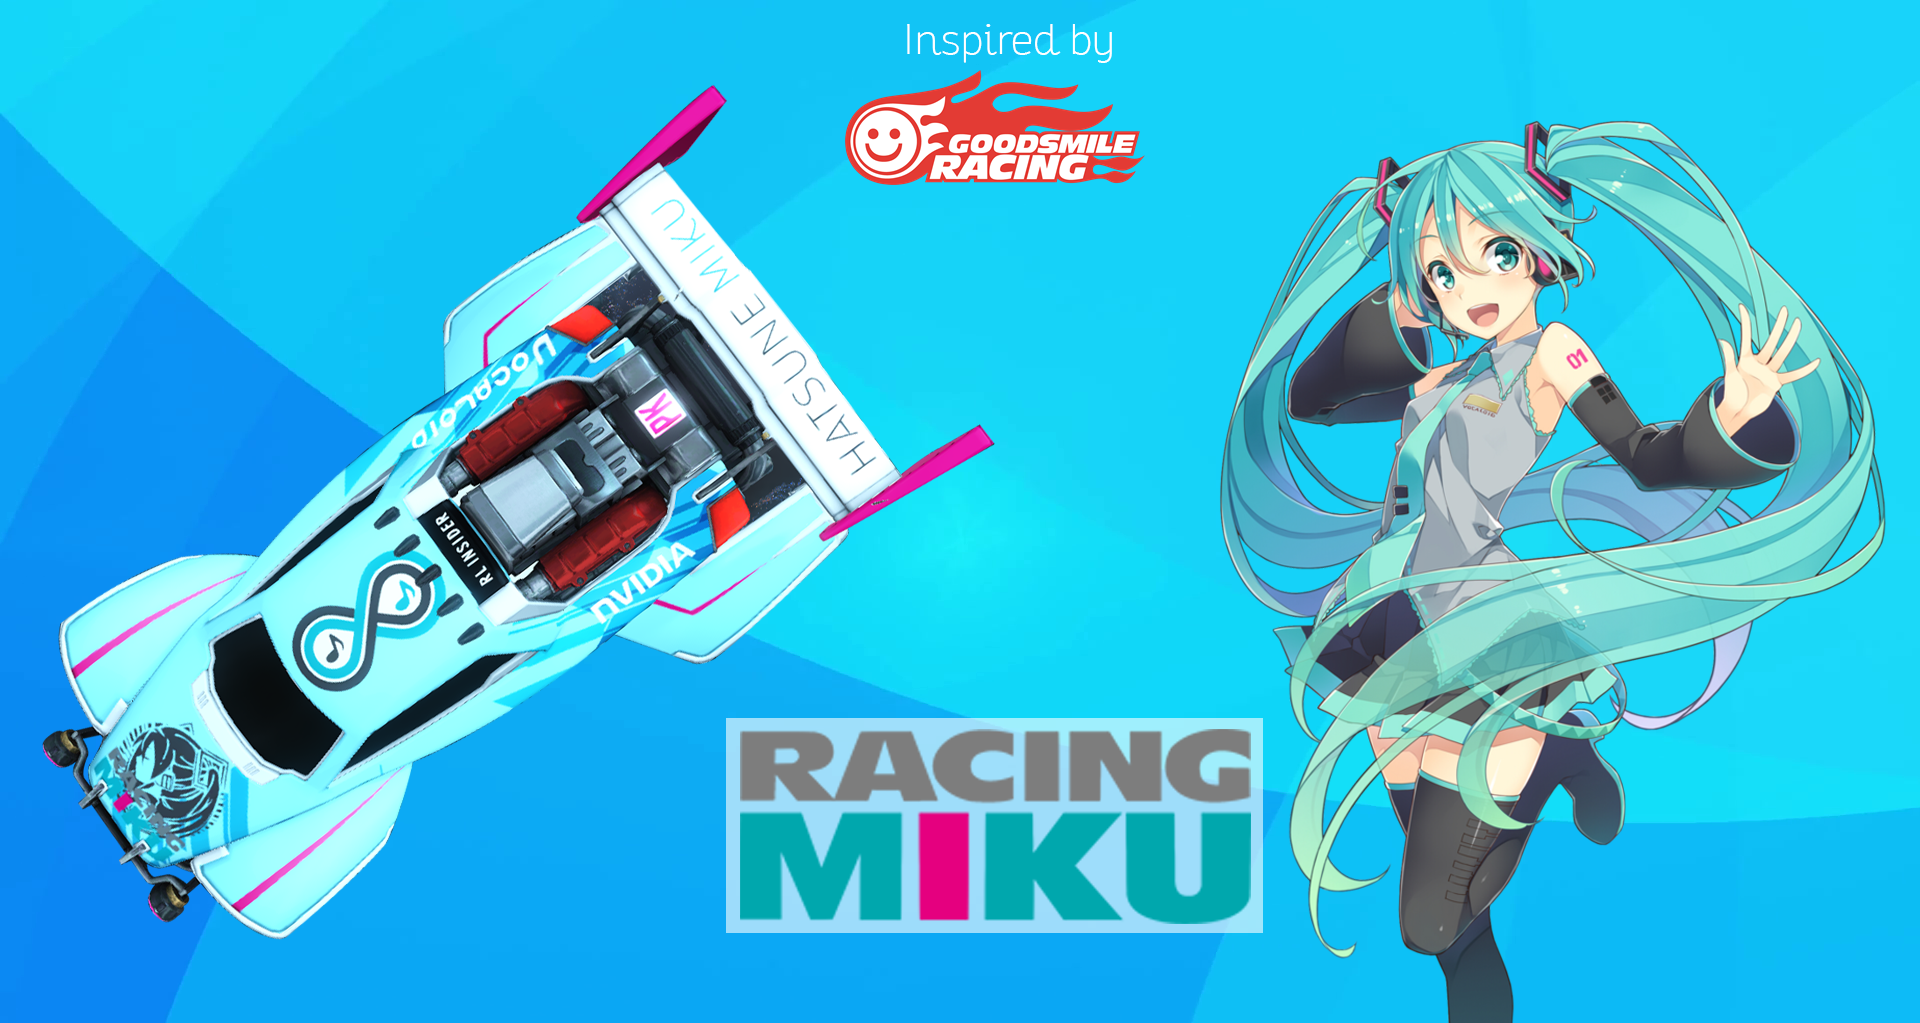 Racing Miku Octane Livery (Inspired By Goodsmile Racing)